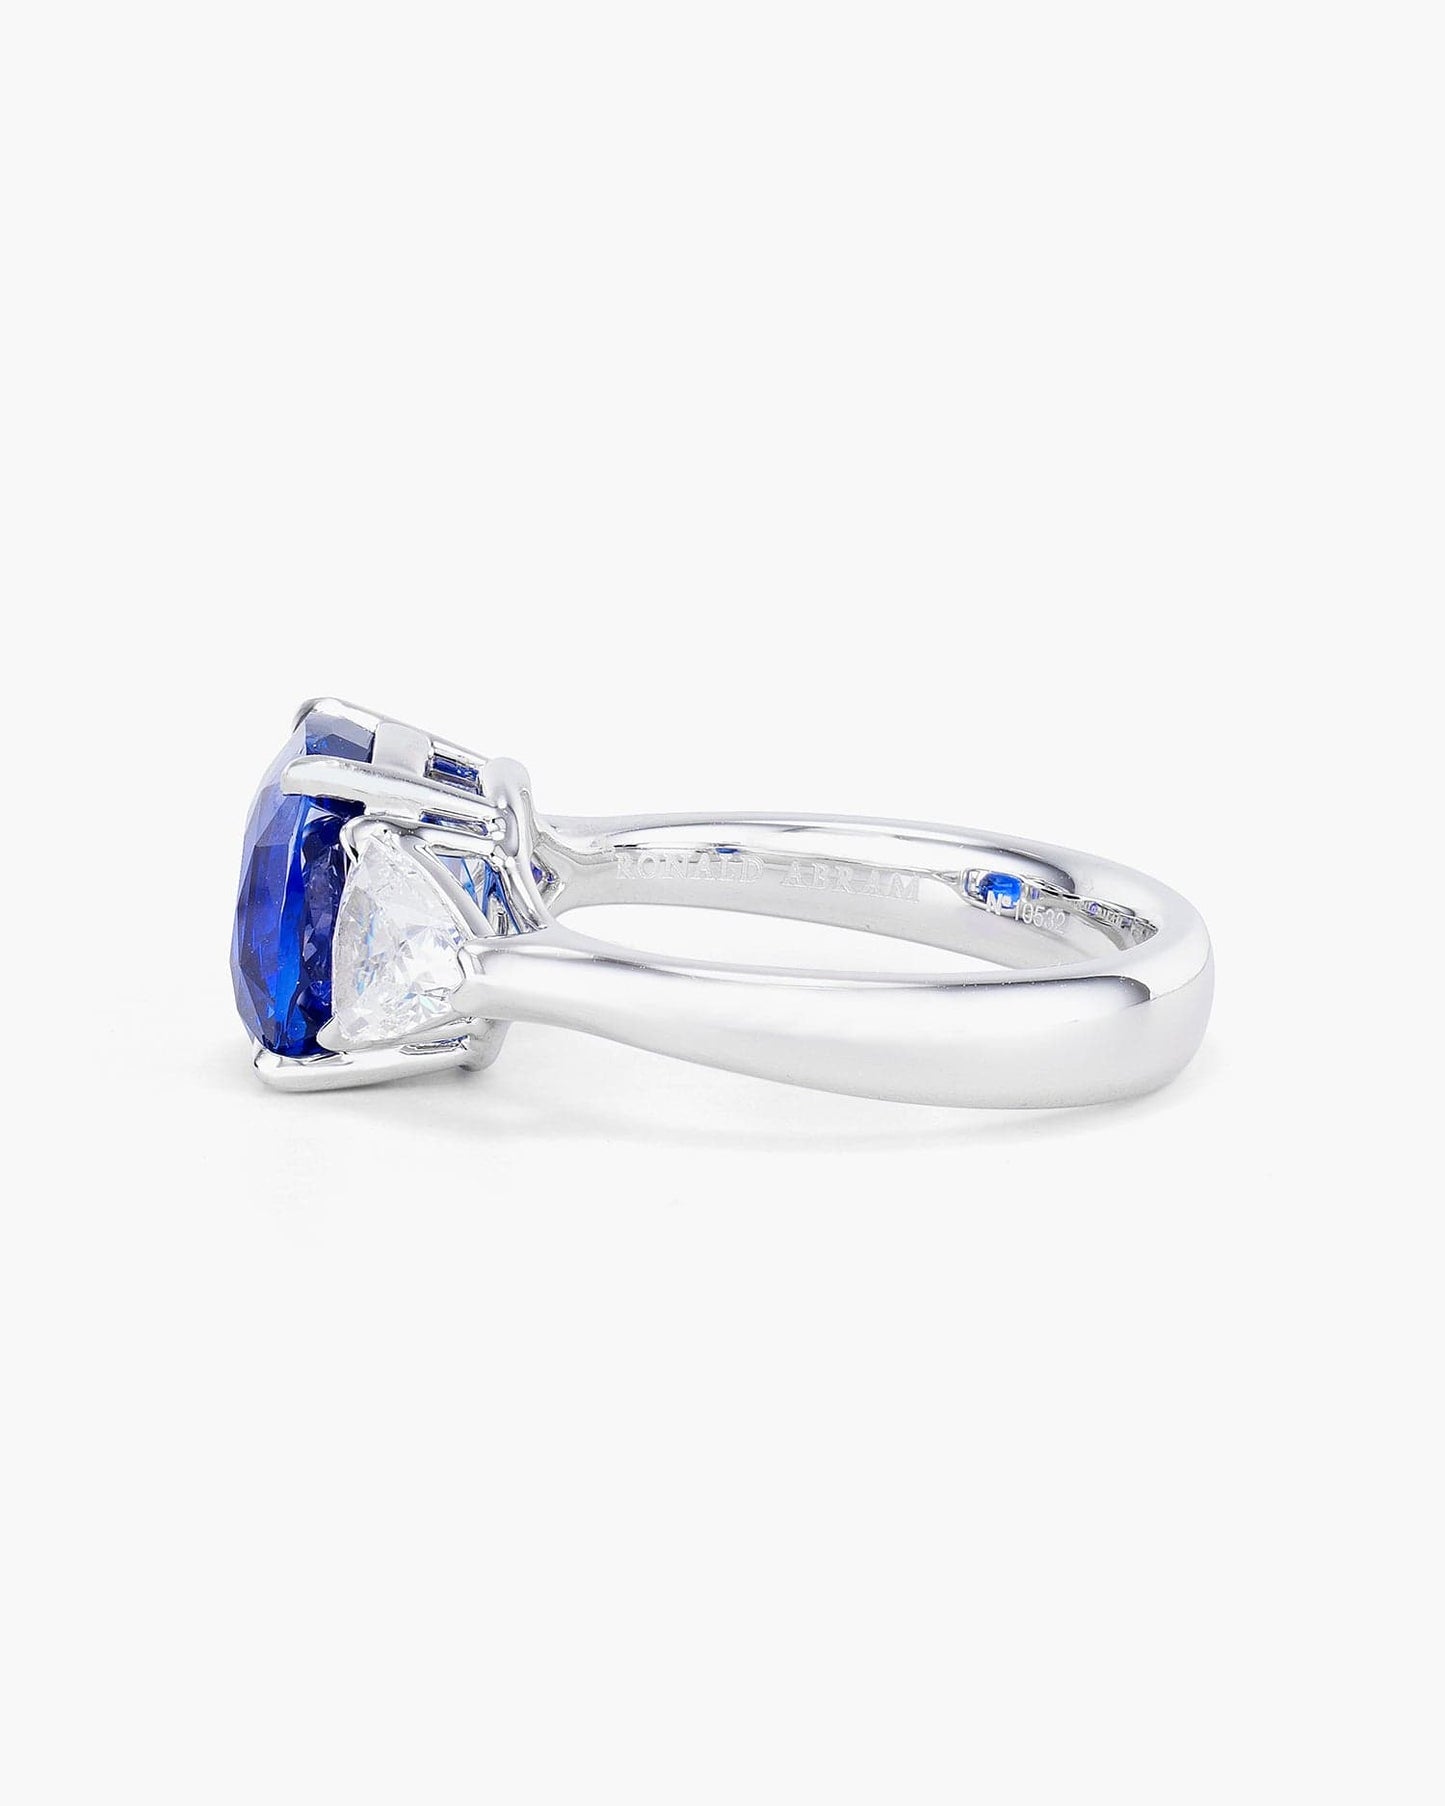 4.54 carat Cushion Cut Ceylon Sapphire and Diamond Ring